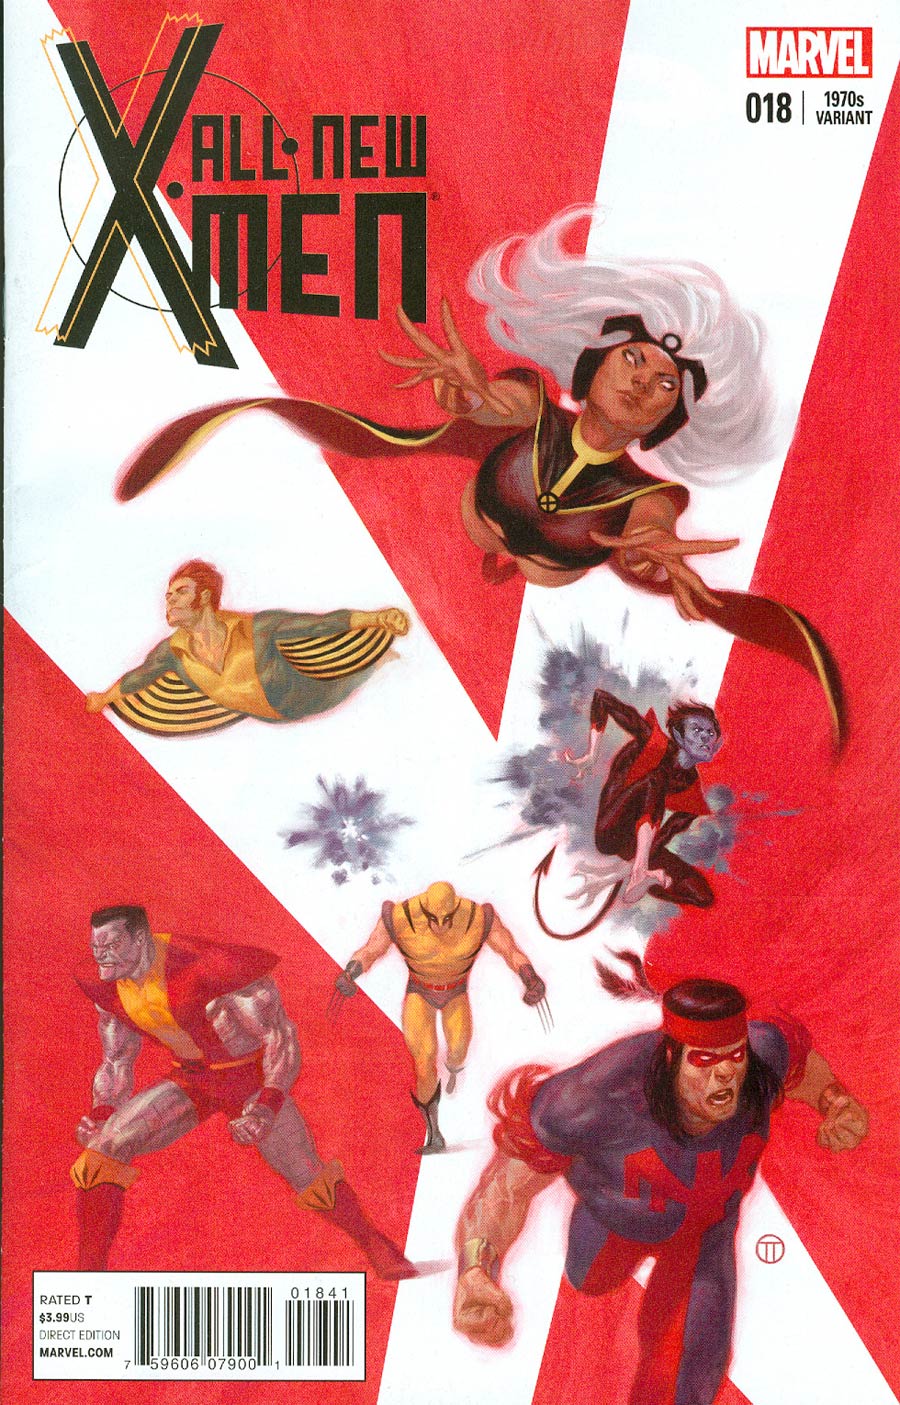 All-New X-Men #18 Cover C Variant Julian Totino Tedesco X-Men In The 1970s Cover